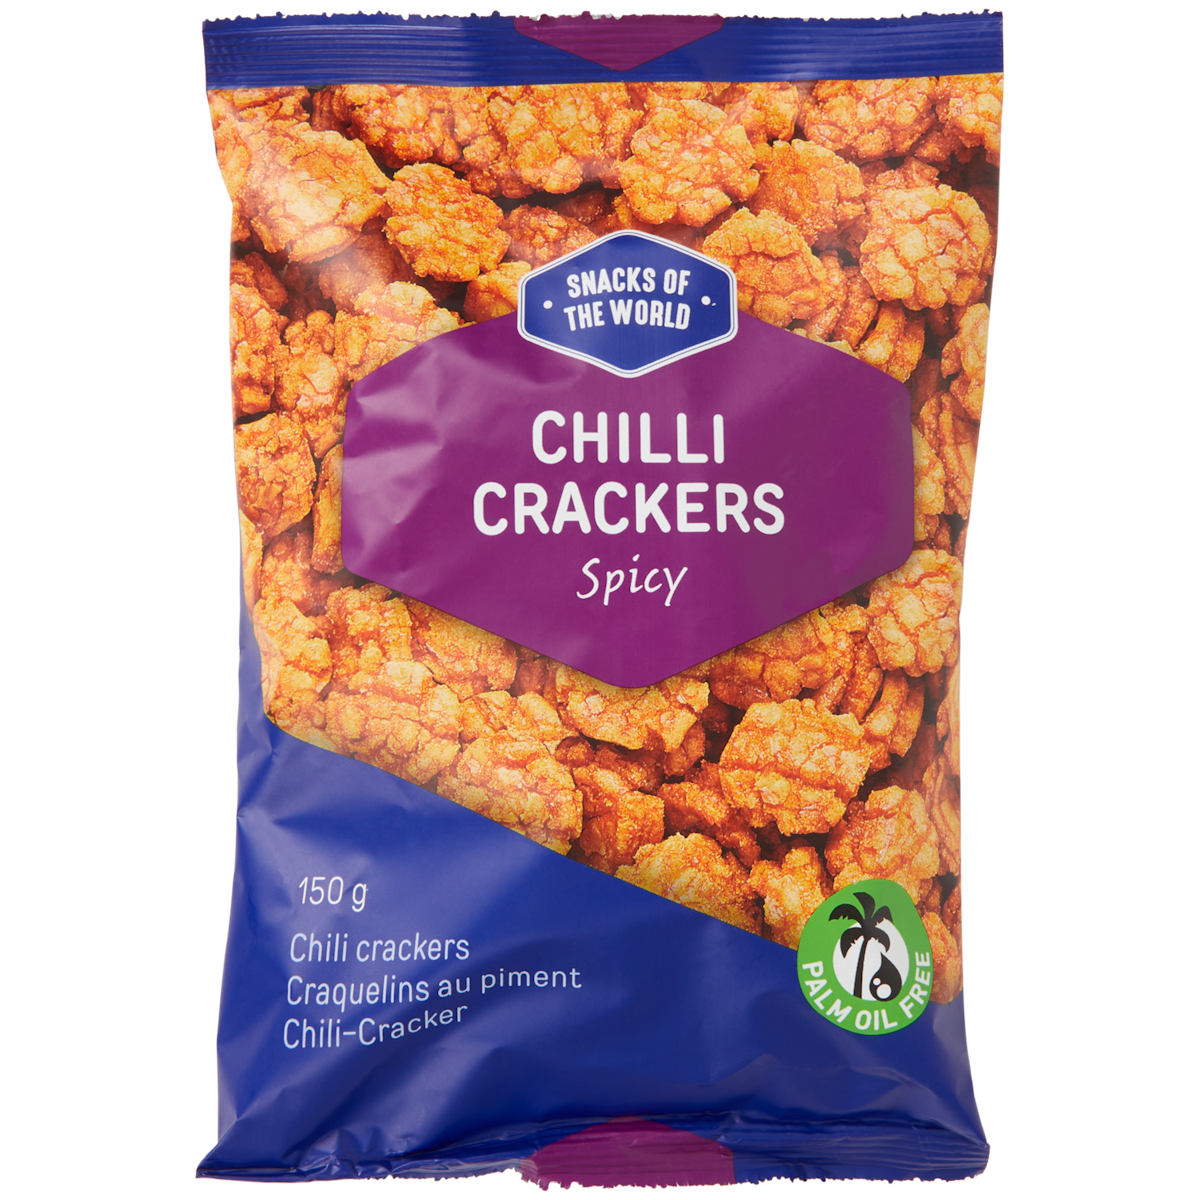 Snacks of the World Chili Cracker Spicy